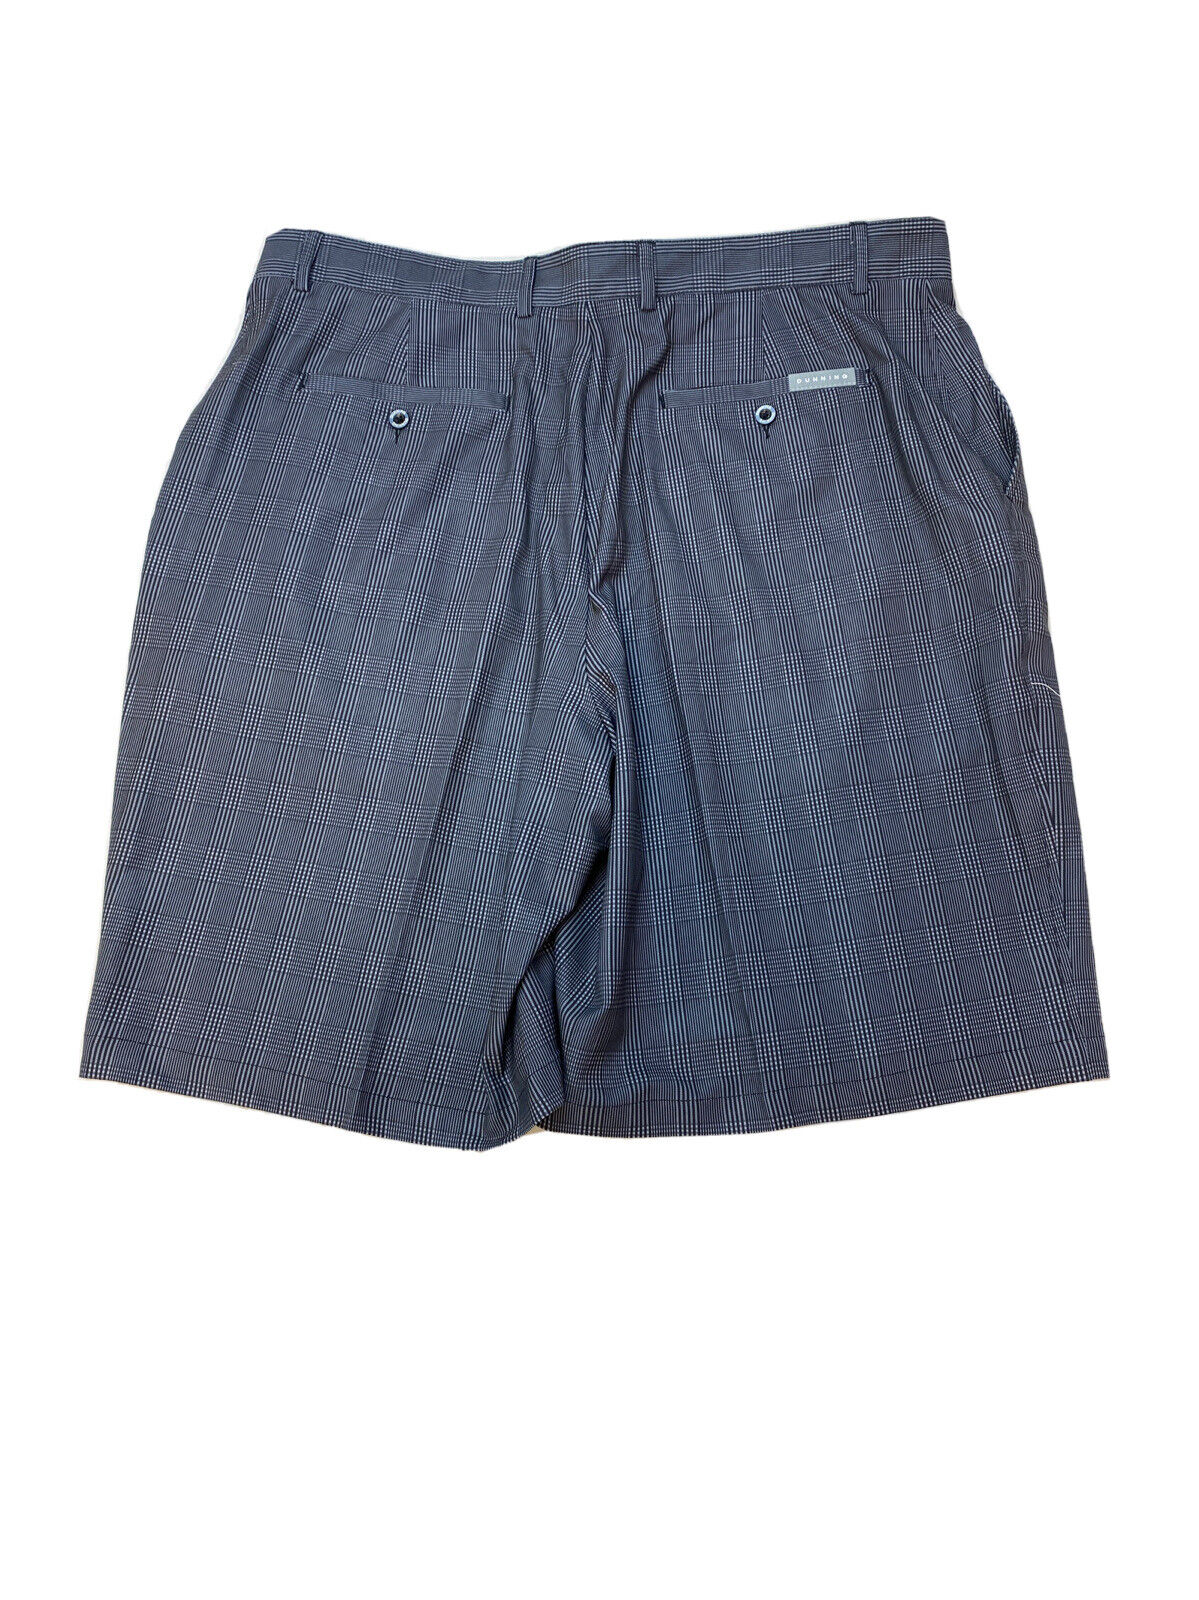 Dunning - Pantalones cortos de golf elásticos de poliéster a cuadros grises para hombre, talla 38